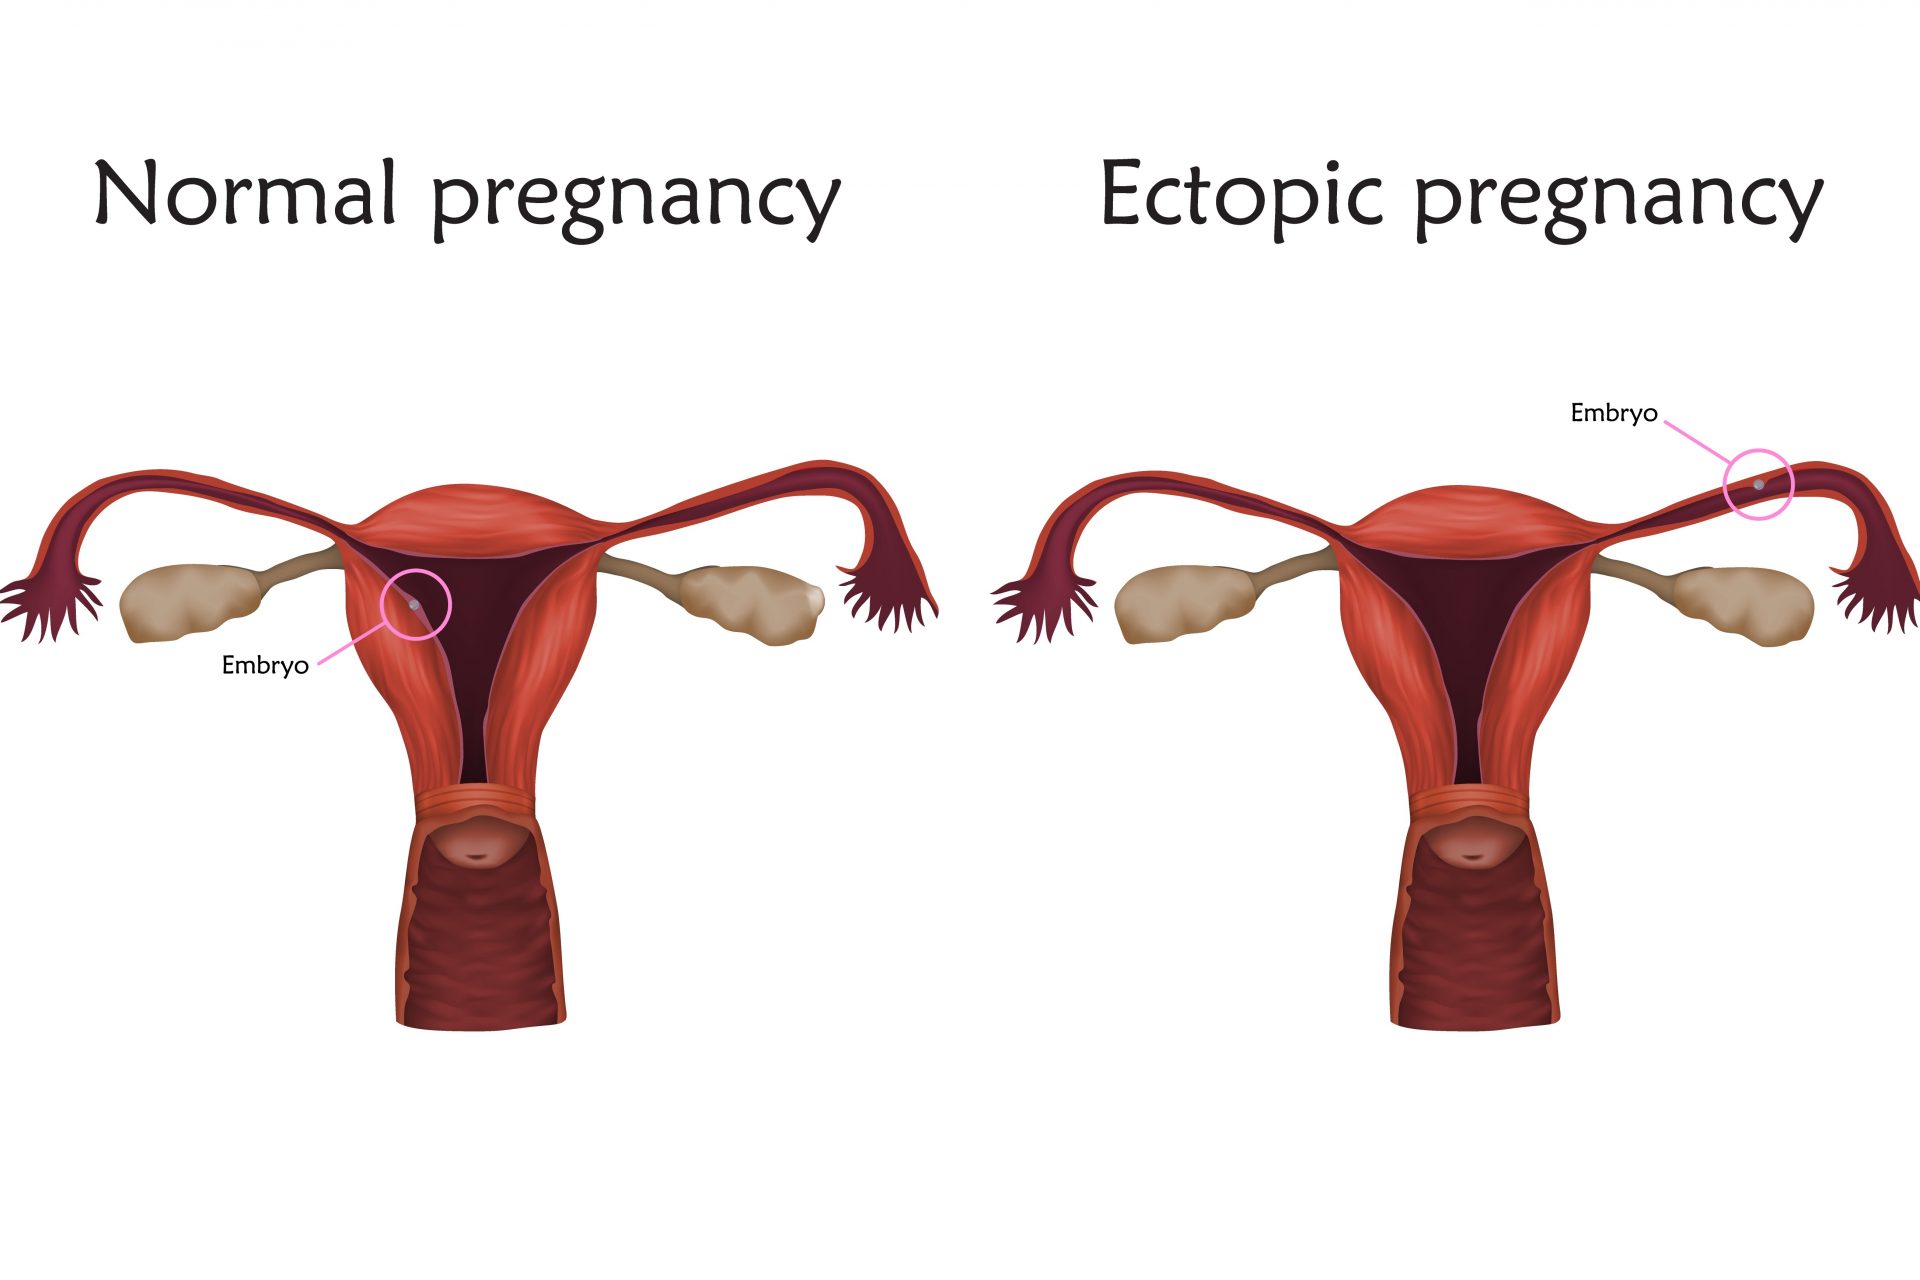 Delays in treatments for ectopic pregnancies 